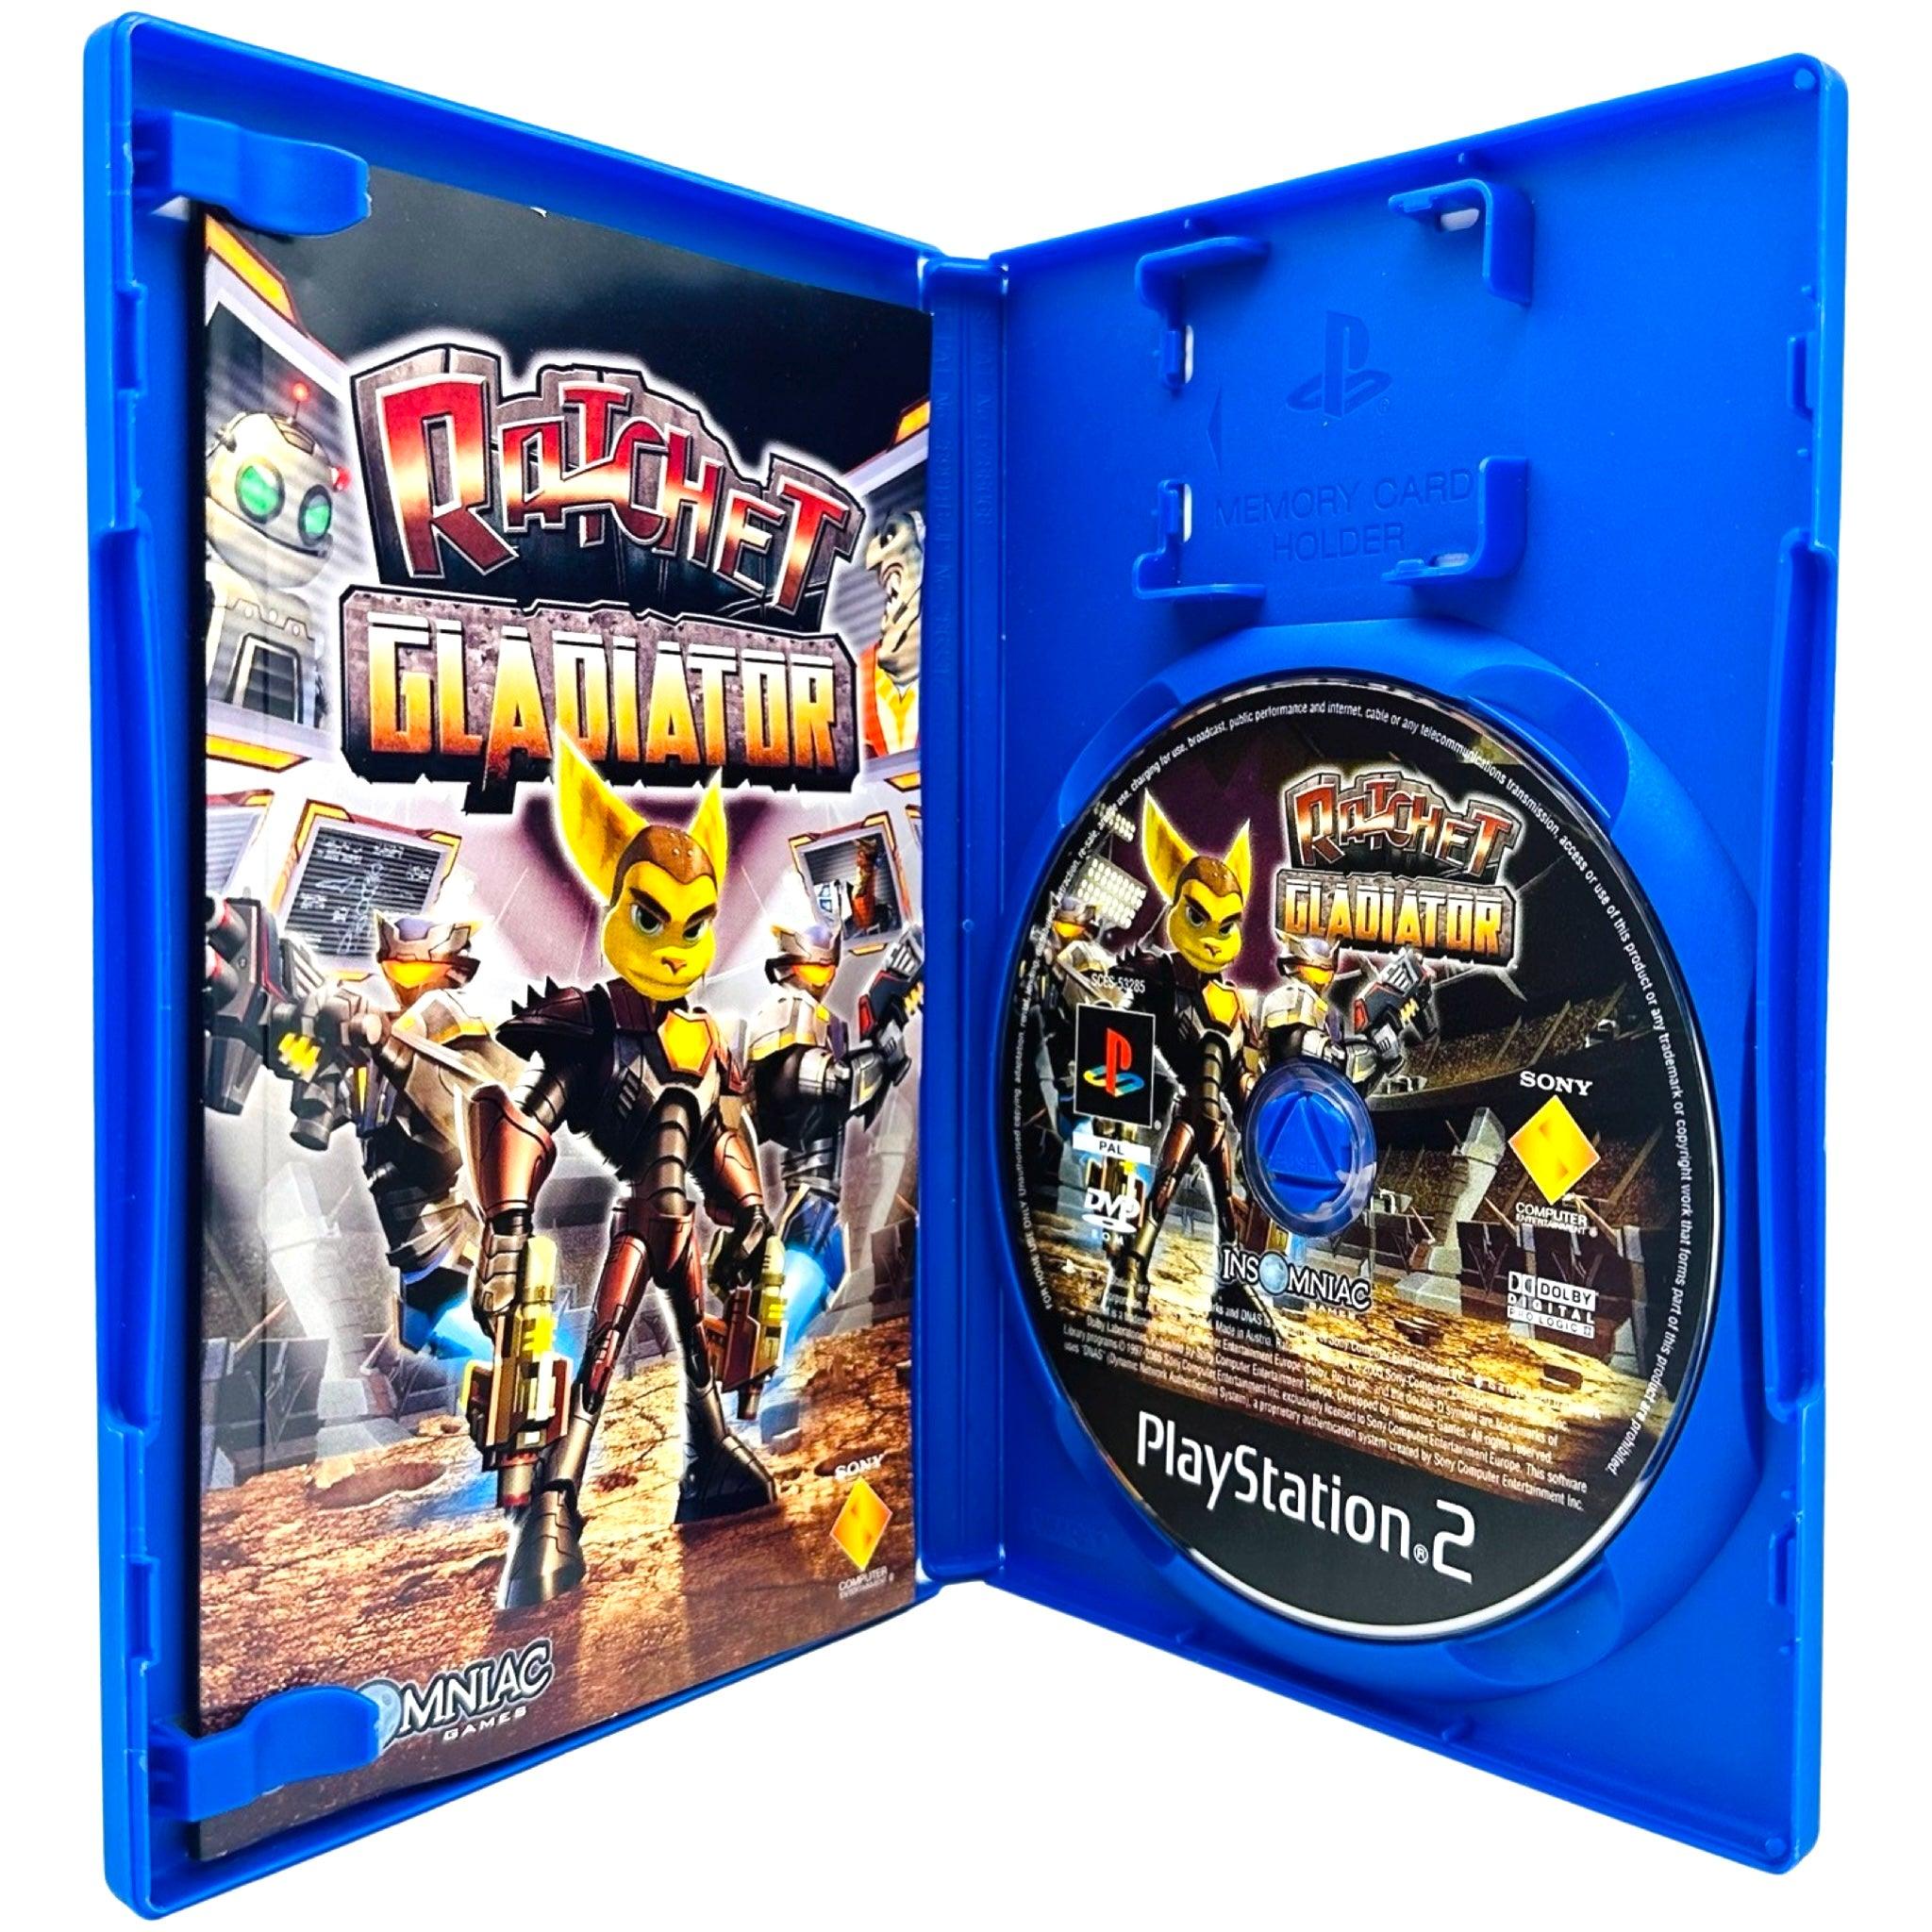 PS2: Ratchet: Gladiator - RetroGaming.no